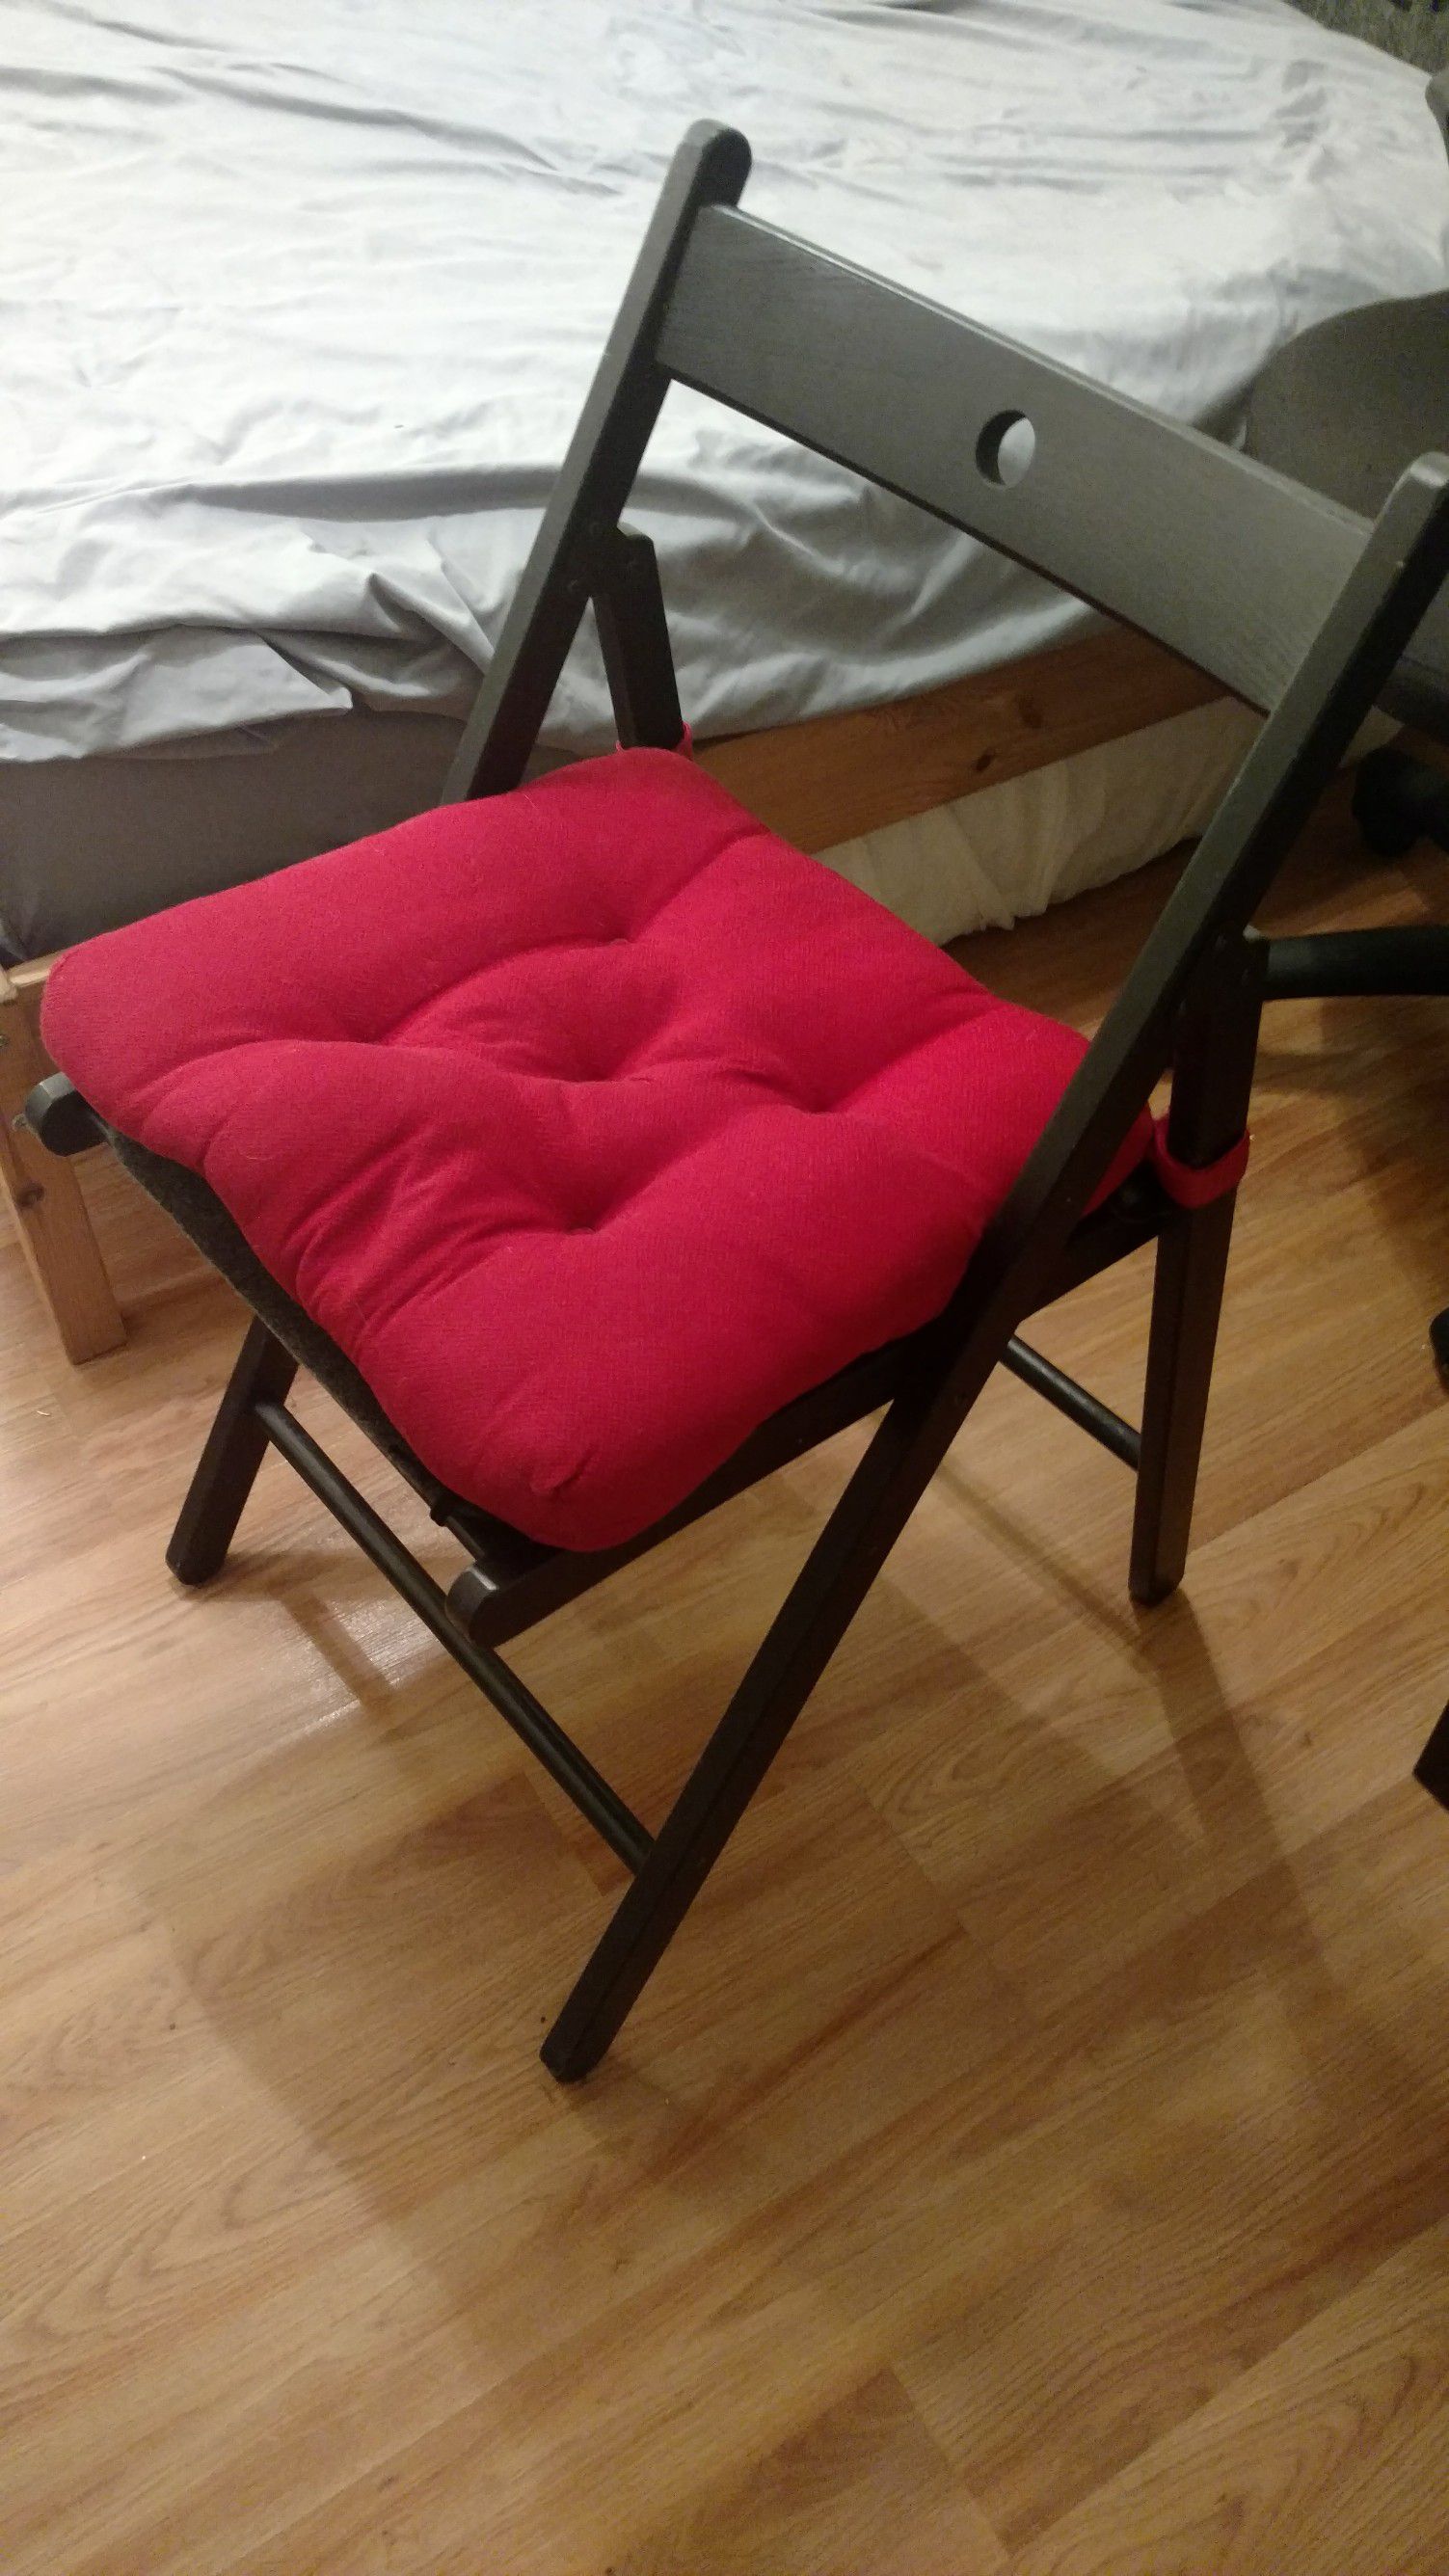 Ikea folding chairs